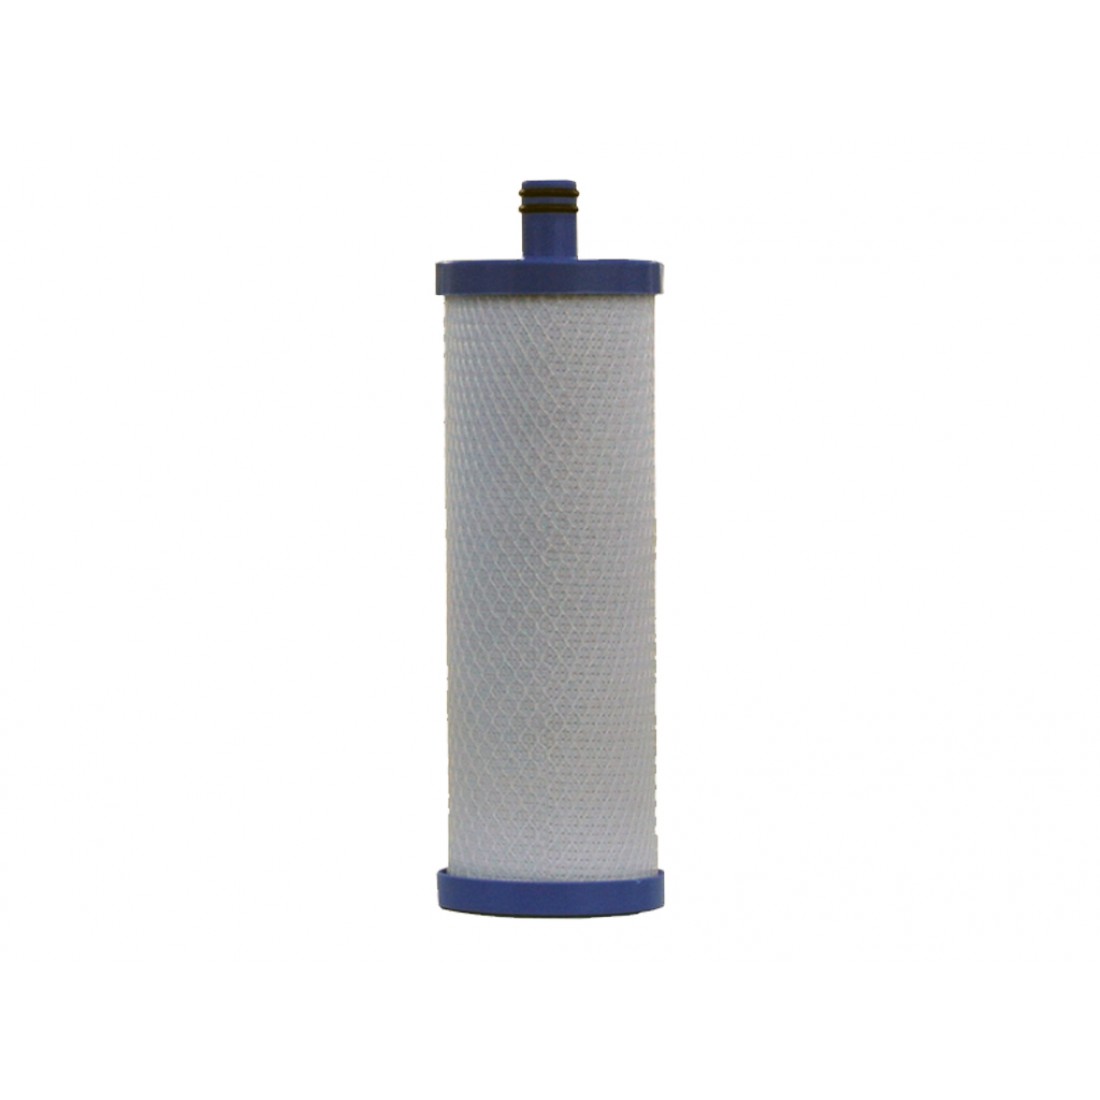 Raindance Sure Seal 5um Carbon Block Water Filter CTO-68260